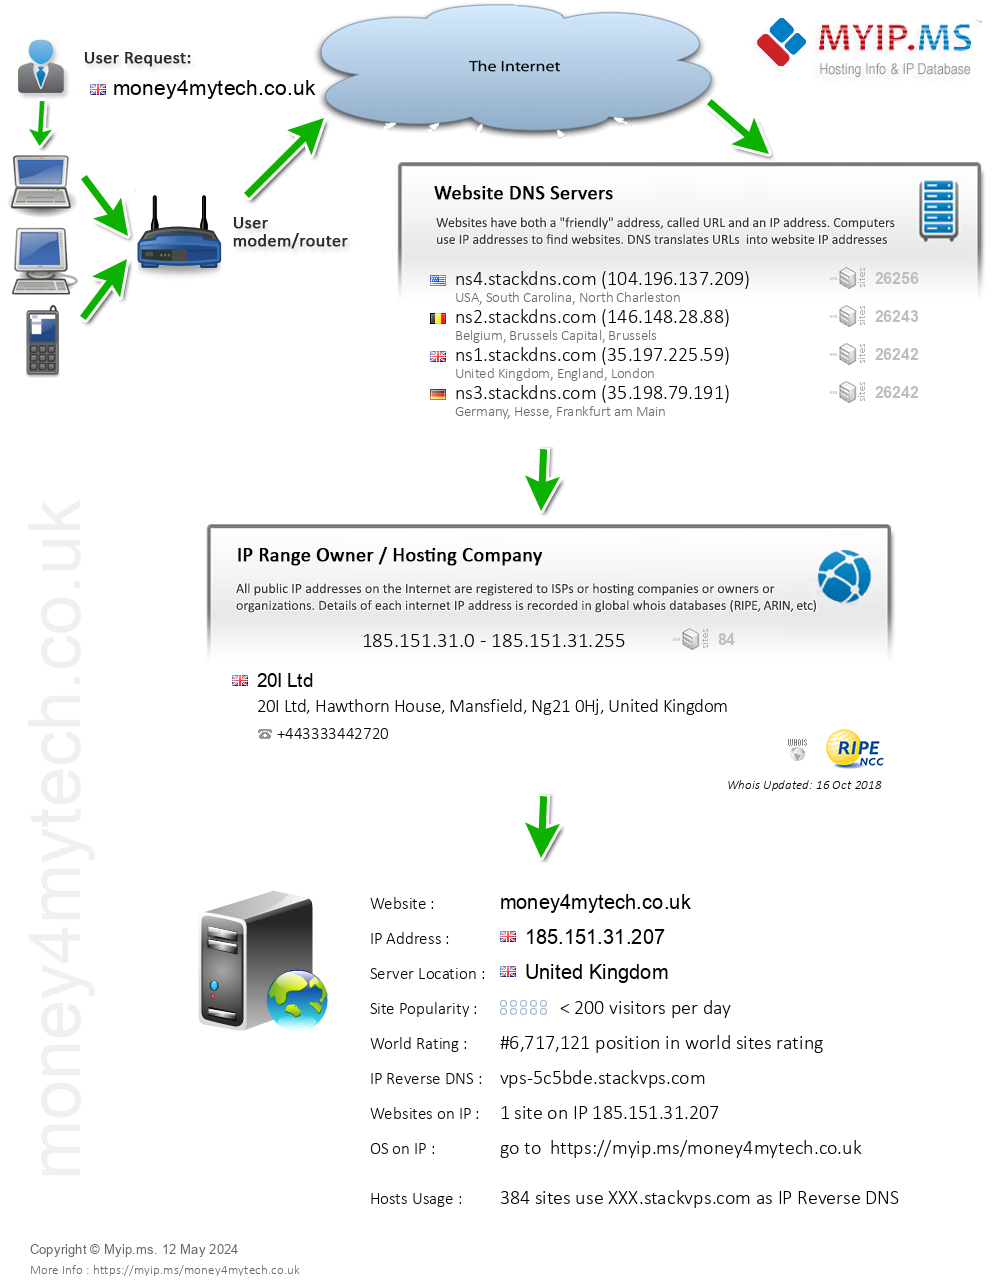 Money4mytech.co.uk - Website Hosting Visual IP Diagram